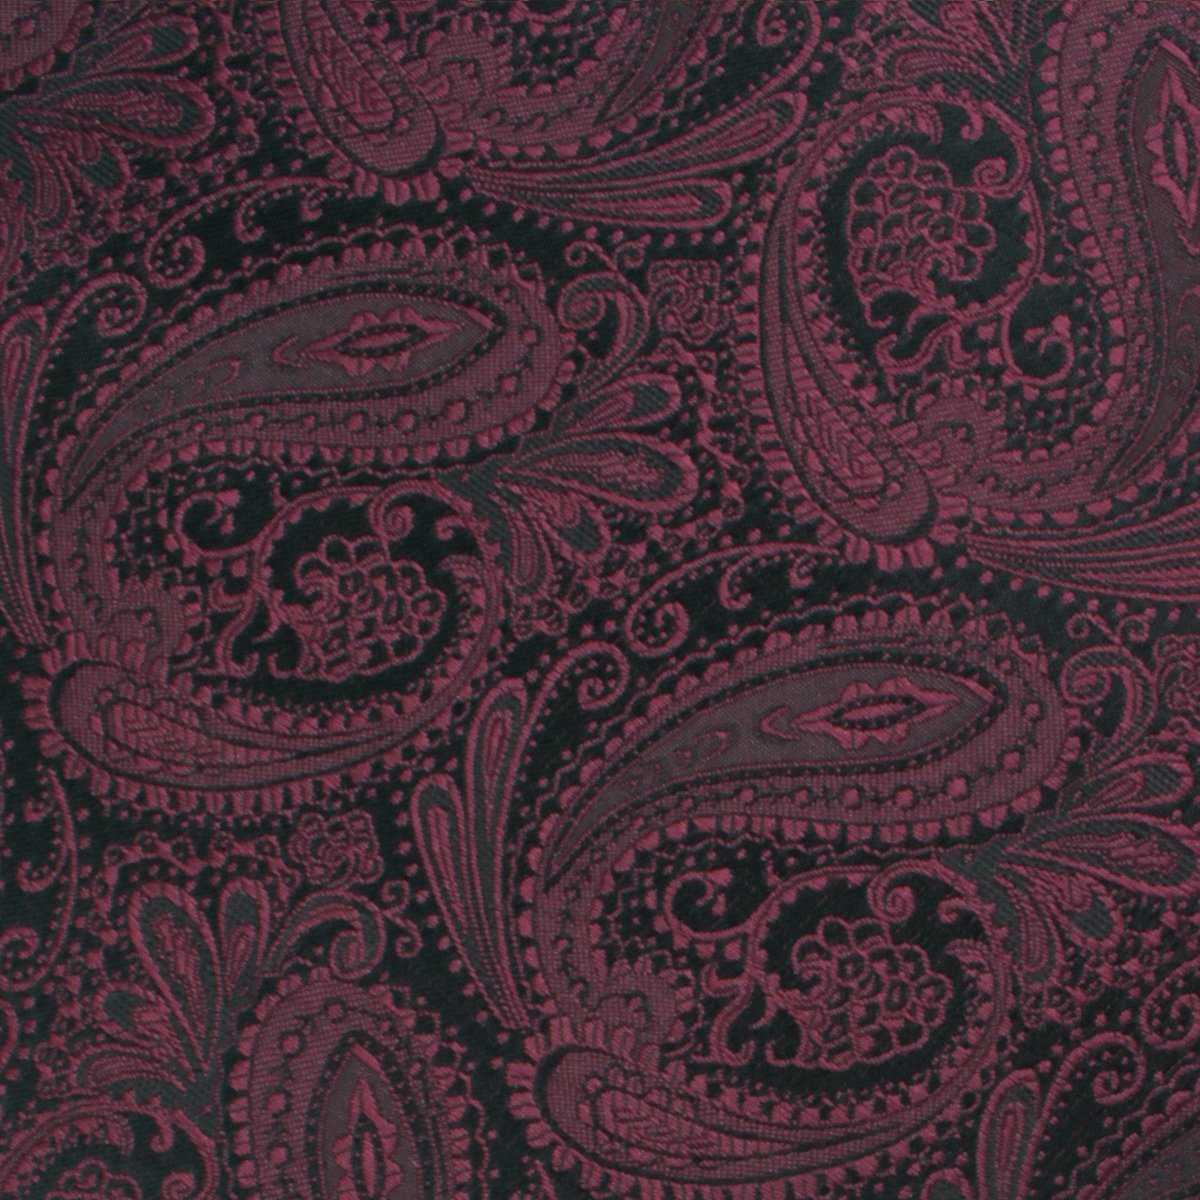 Mahogany Red Paisley Pocket Square Fabric